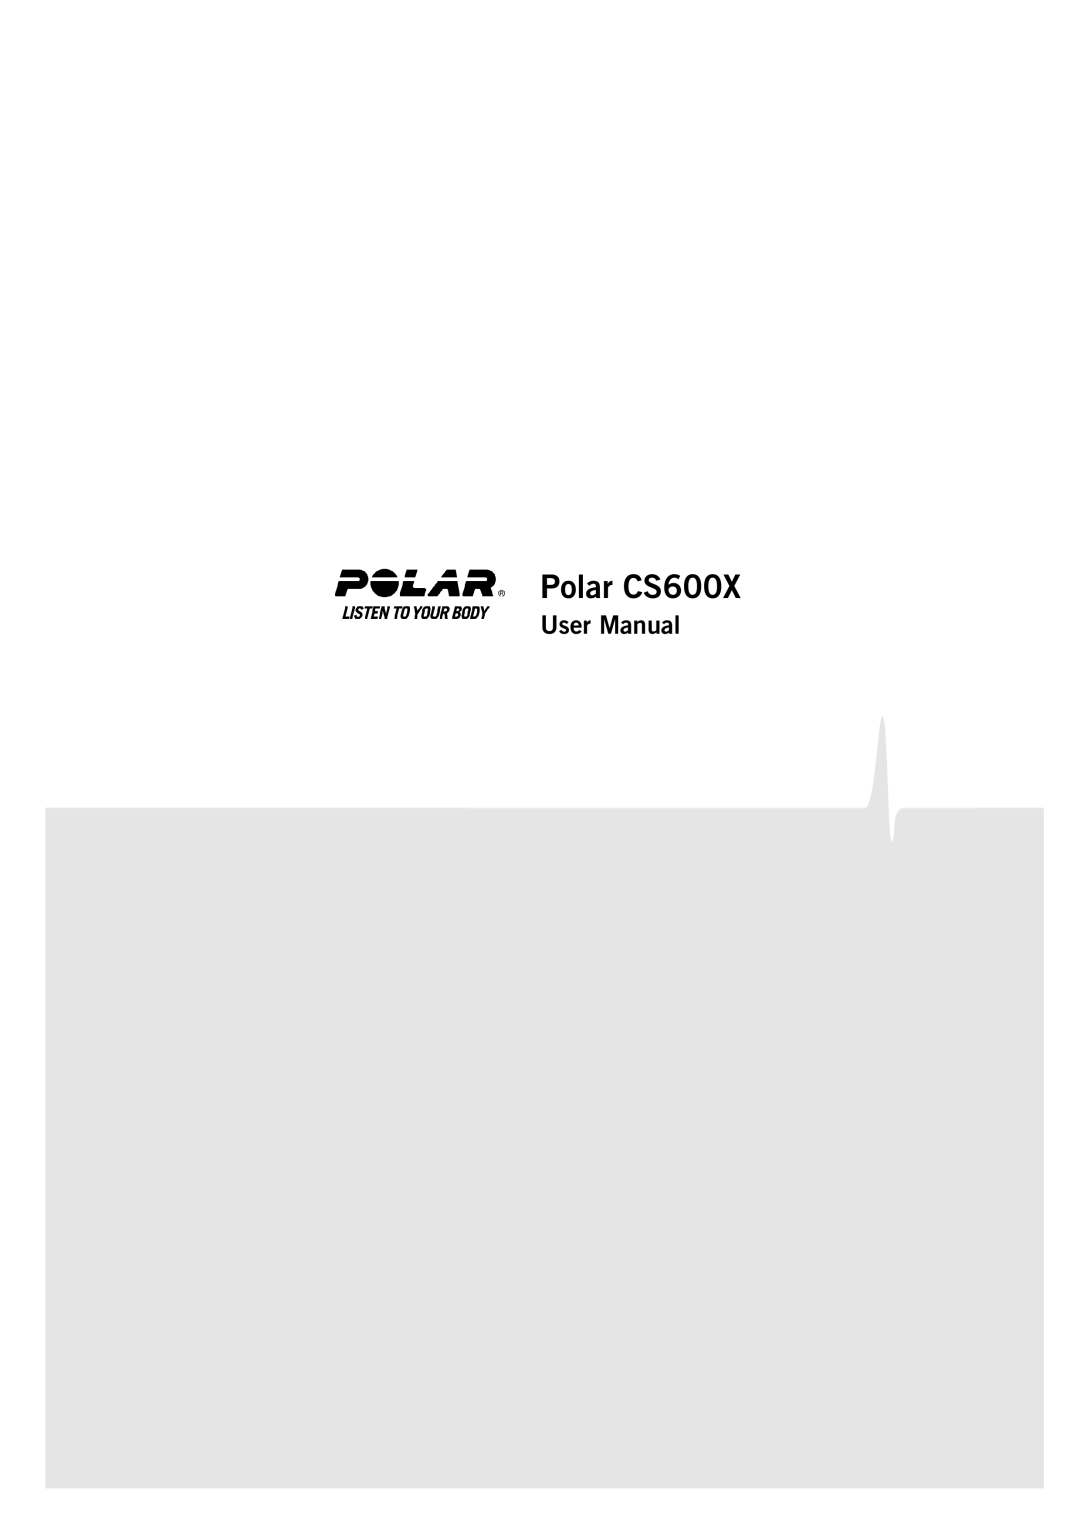 Polar user manual Polar CS600X, User Manual 